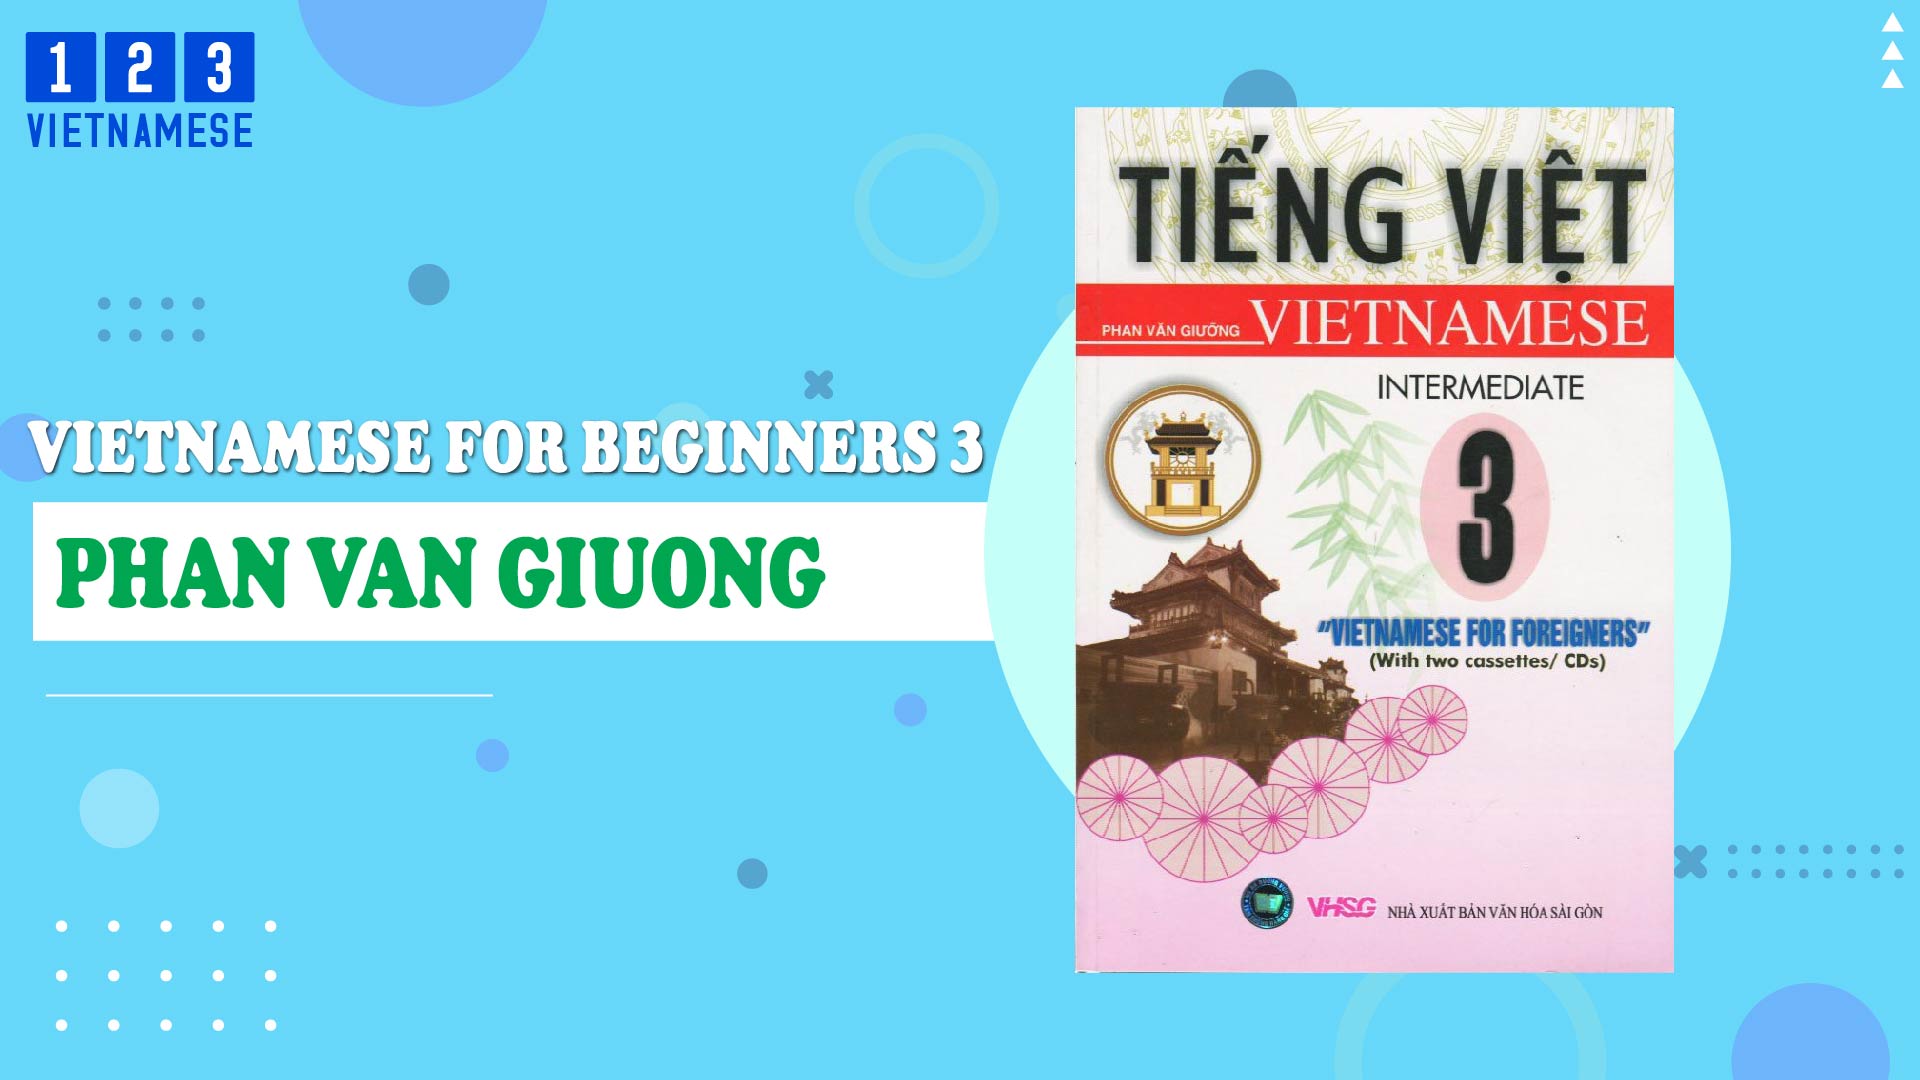 Vietnamese for Beginners 3 - Phan Van Giuong [Learning Vietnamese book]